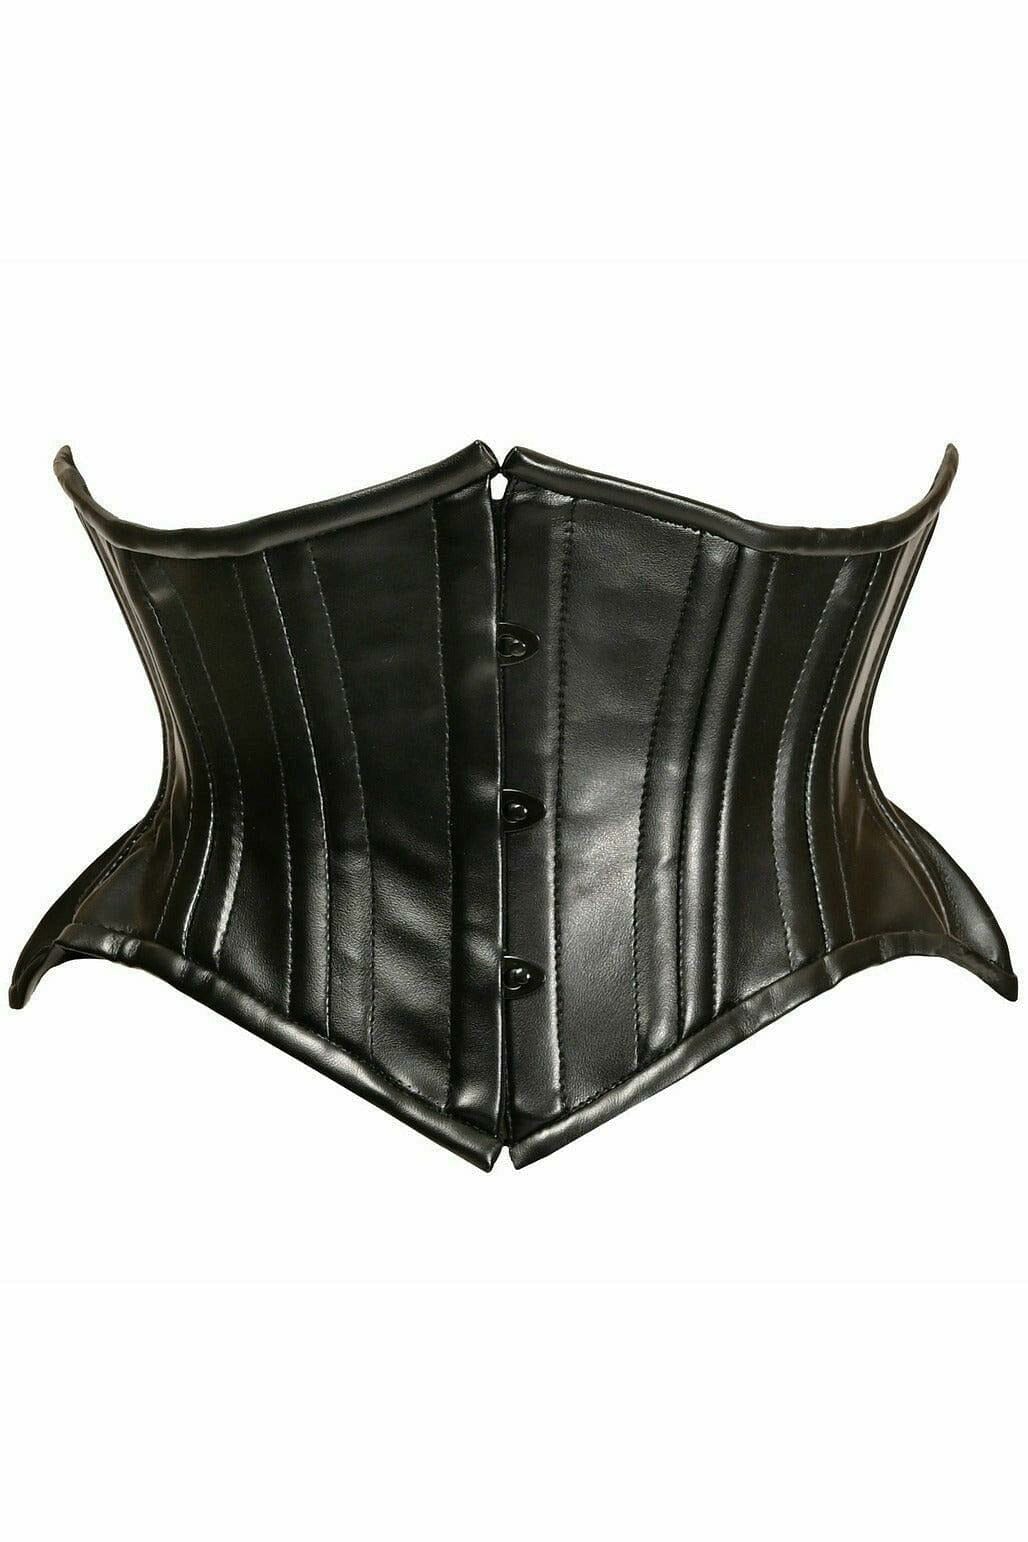 Top Drawer Black Faux Leather Double Steel Boned Curvy Cut Waist Cincher-Waist Cinchers-Daisy Corsets-Black-S-SEXYSHOES.COM